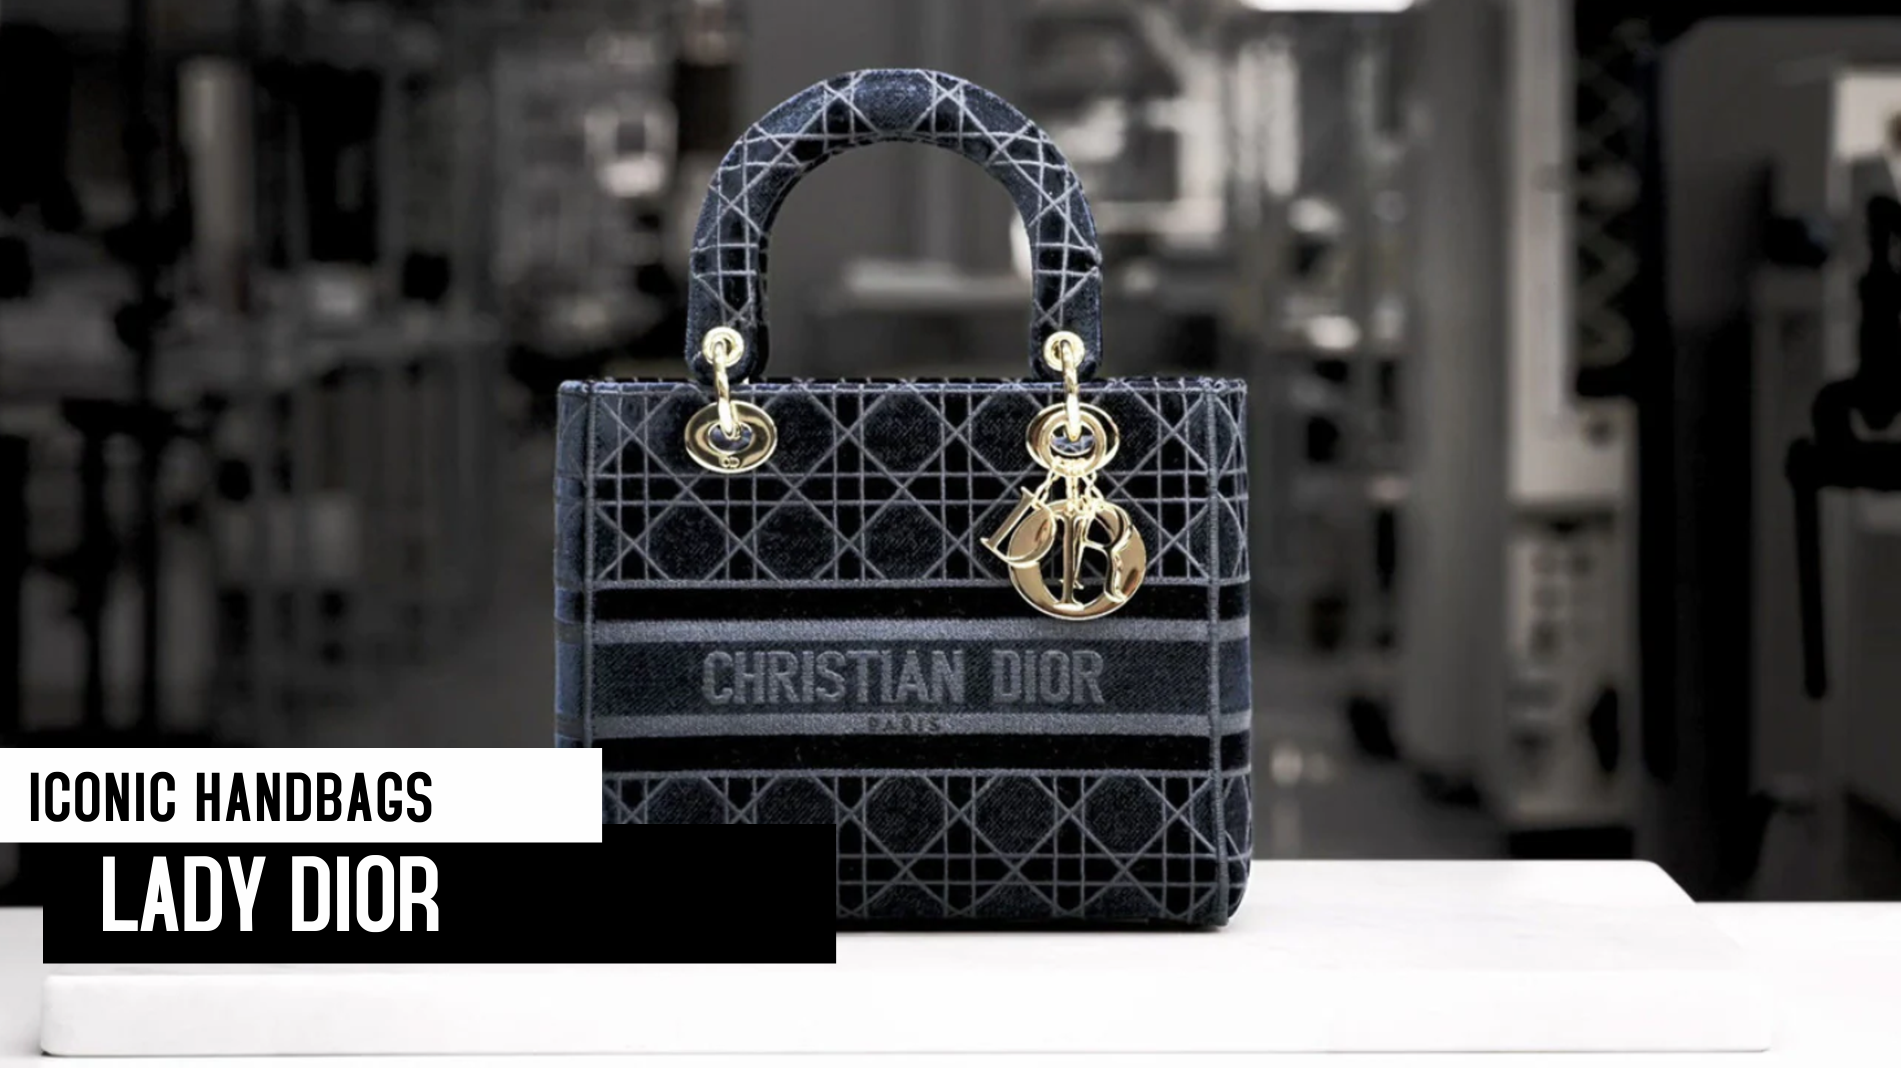 Iconic Handbags - Lady Dior